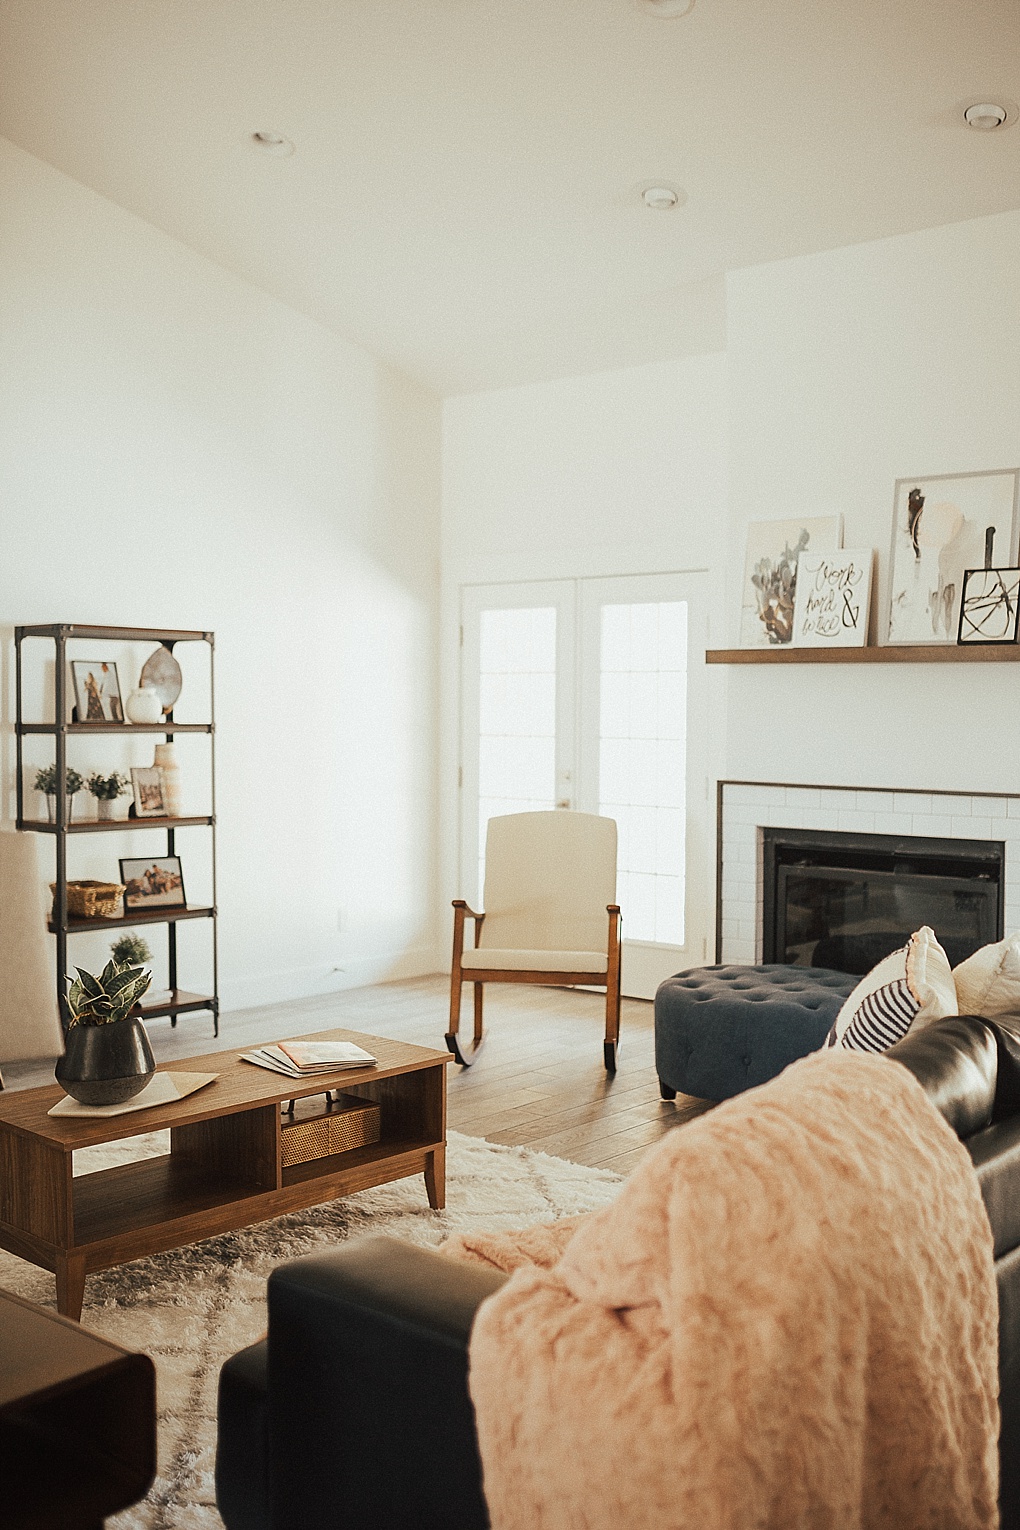 Room Reveal - Our Modern Mid Century Living Room by popular Utah blogger Dani Marie